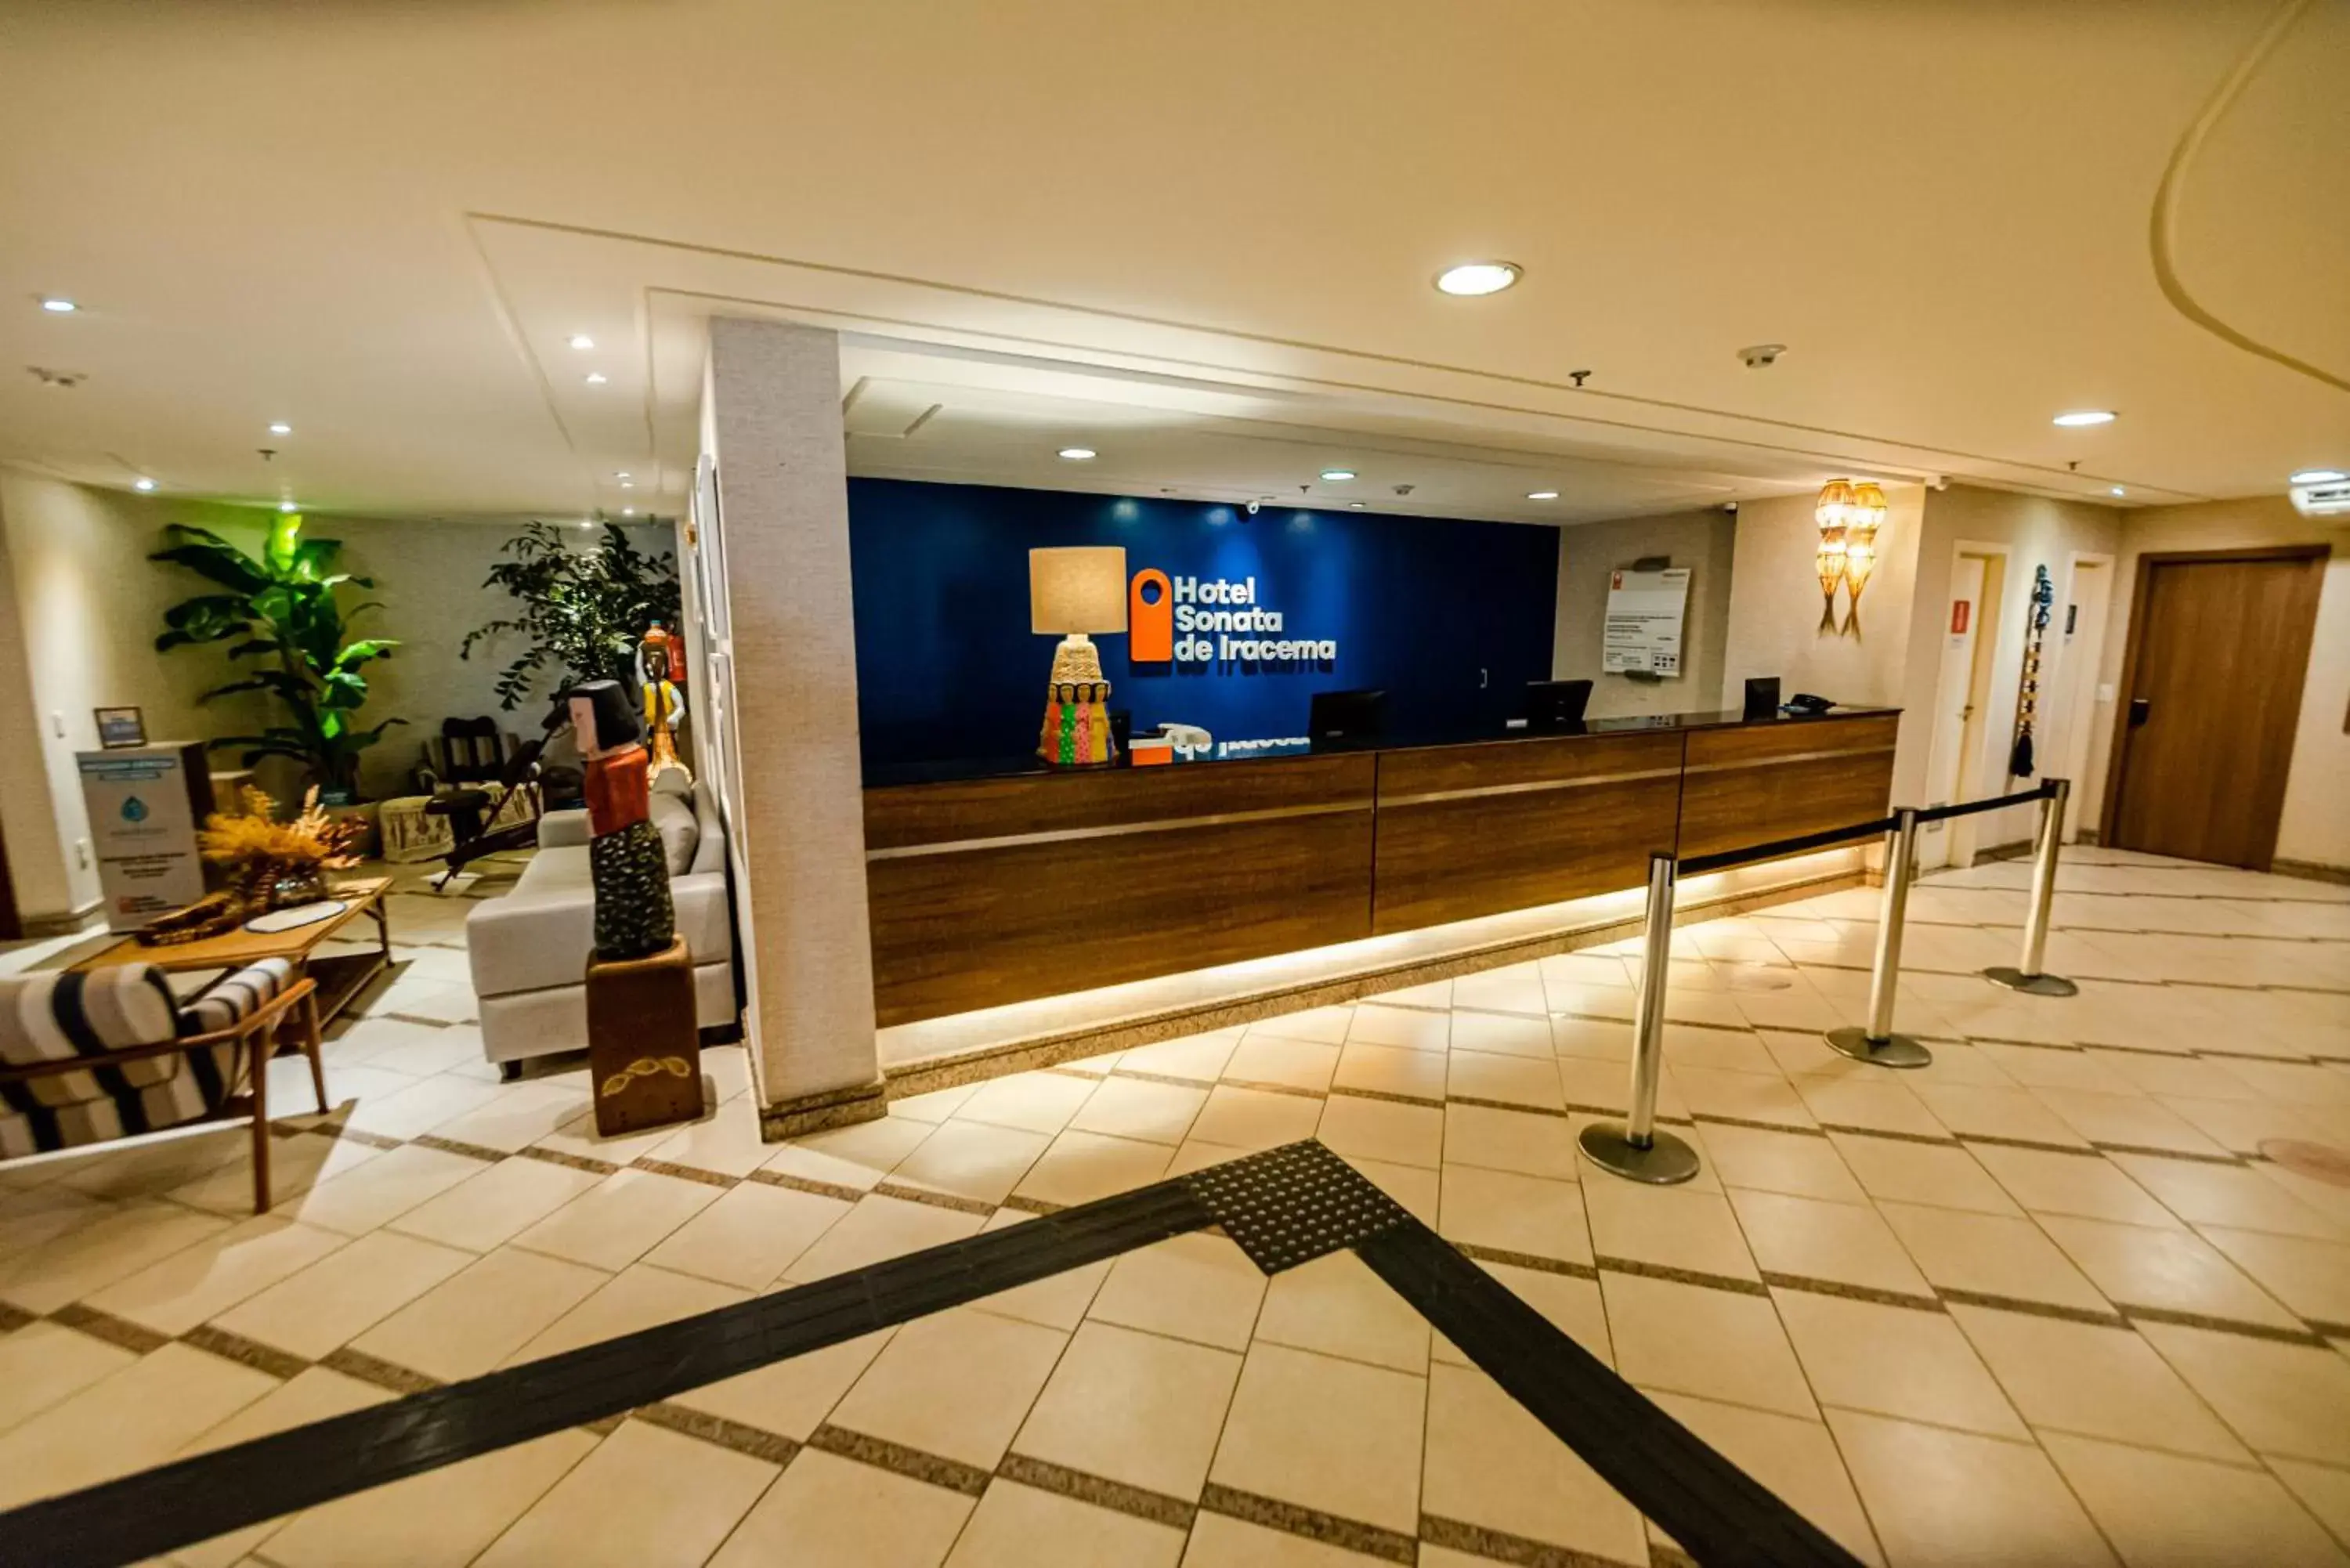 Lobby or reception, Lobby/Reception in Hotel Sonata de Iracema